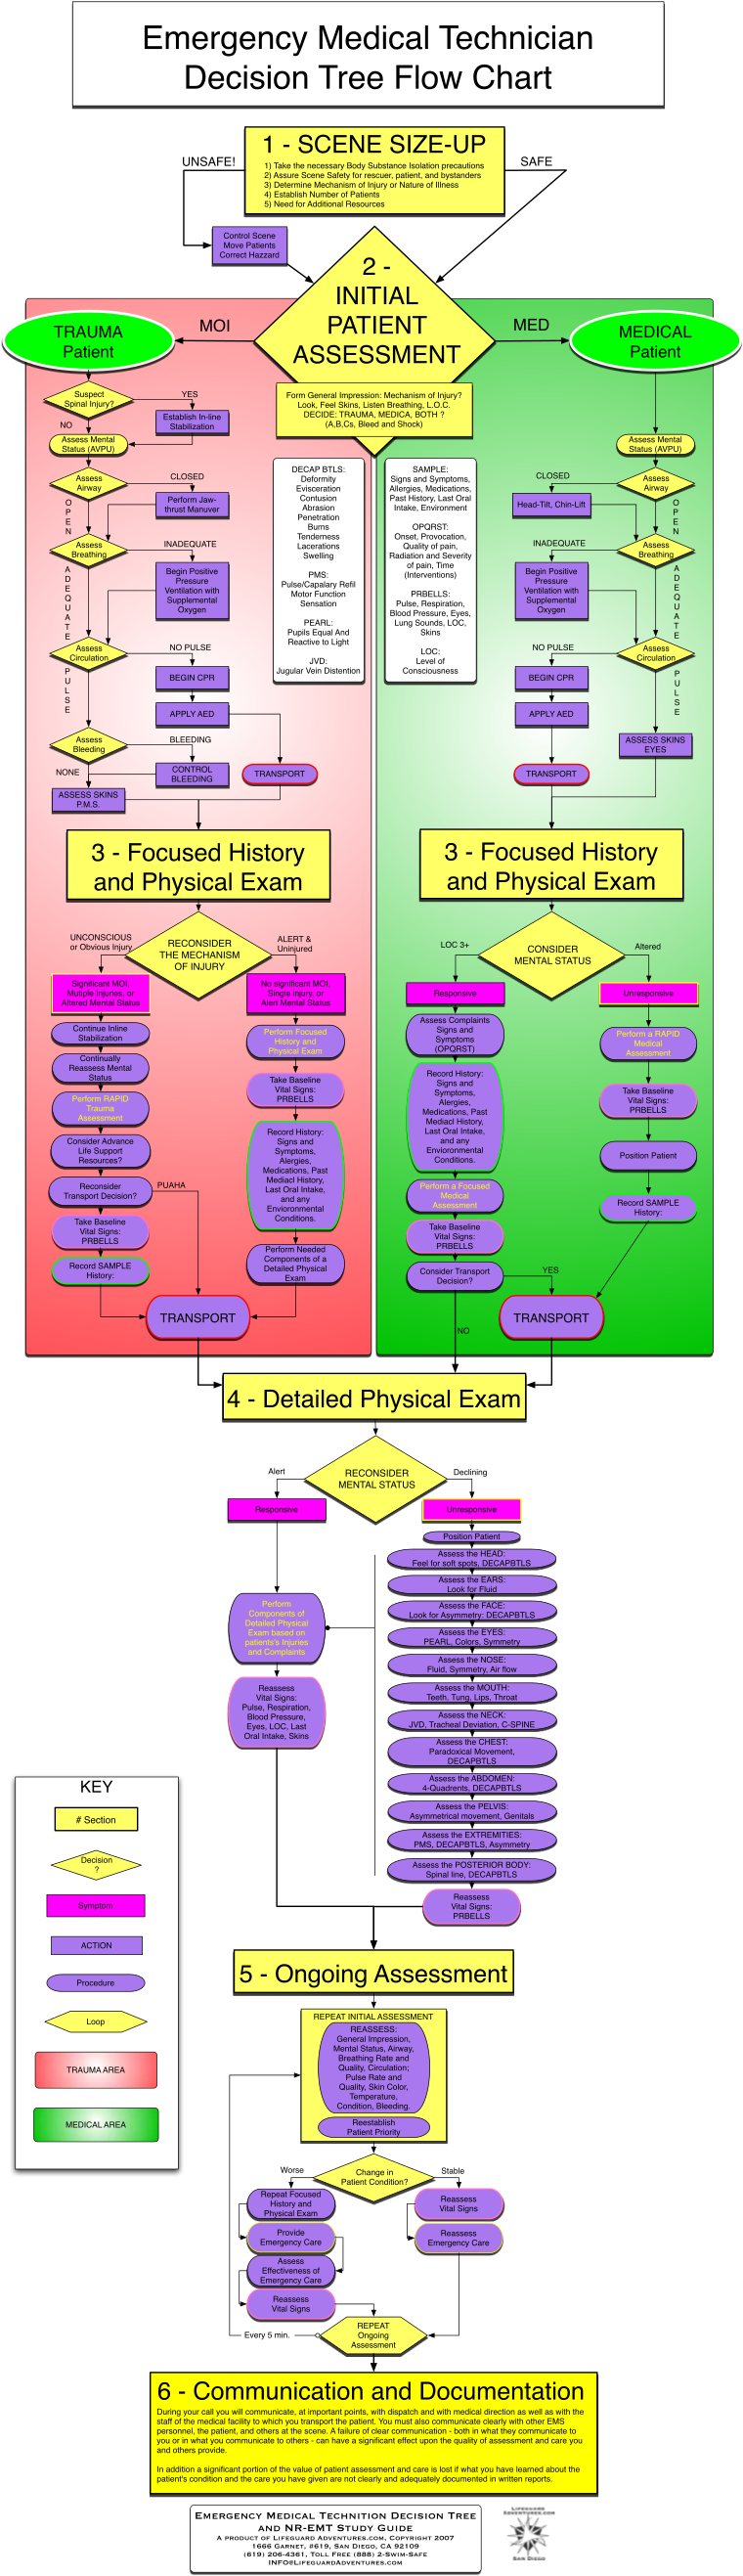 emergency-decision-tree